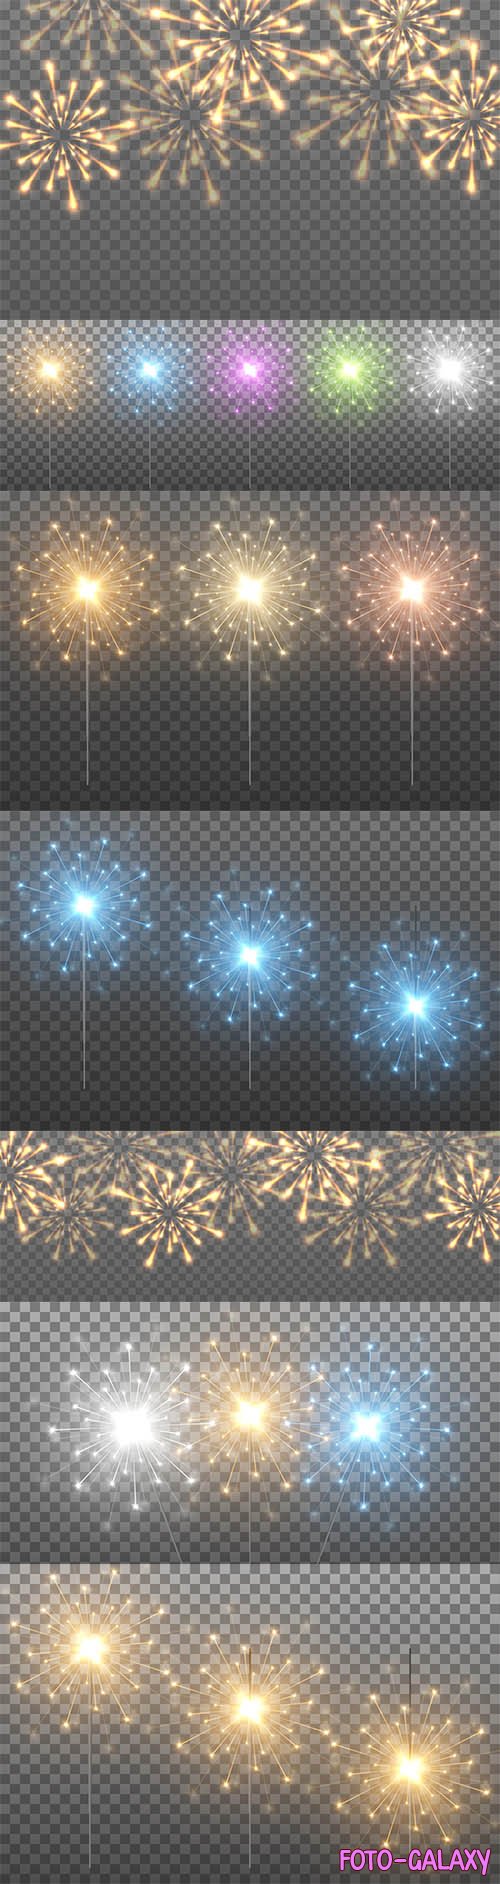 Vector sparklers on an isolated transparent background, gold sparklers, sparks, fireworks